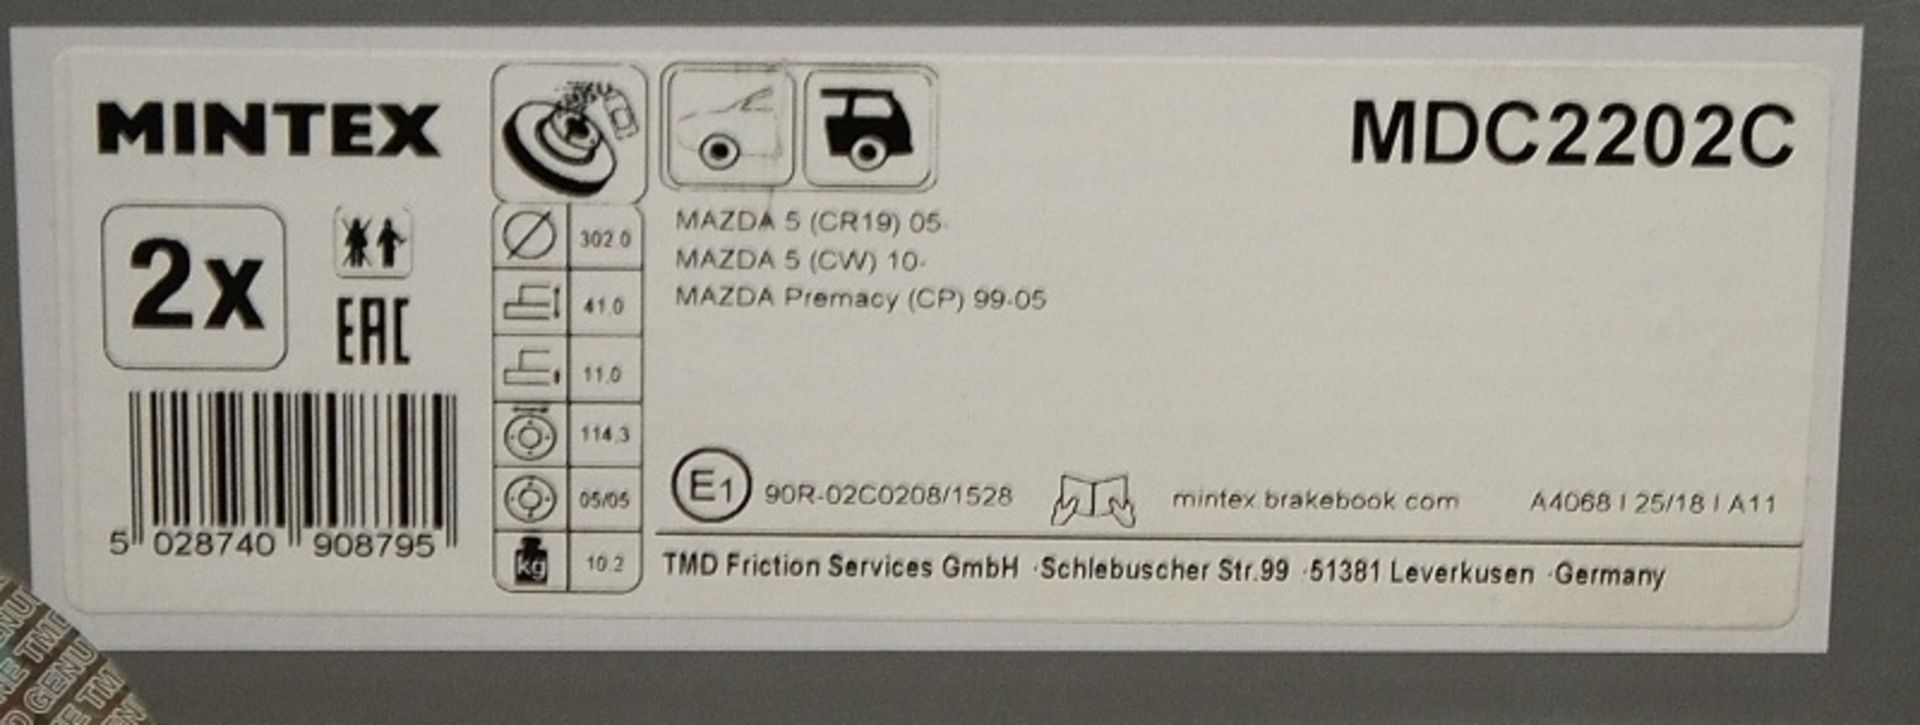 Mintex Brake Discs model numbers MDC2202C, MDC2503C, MDC2242C - Image 2 of 4